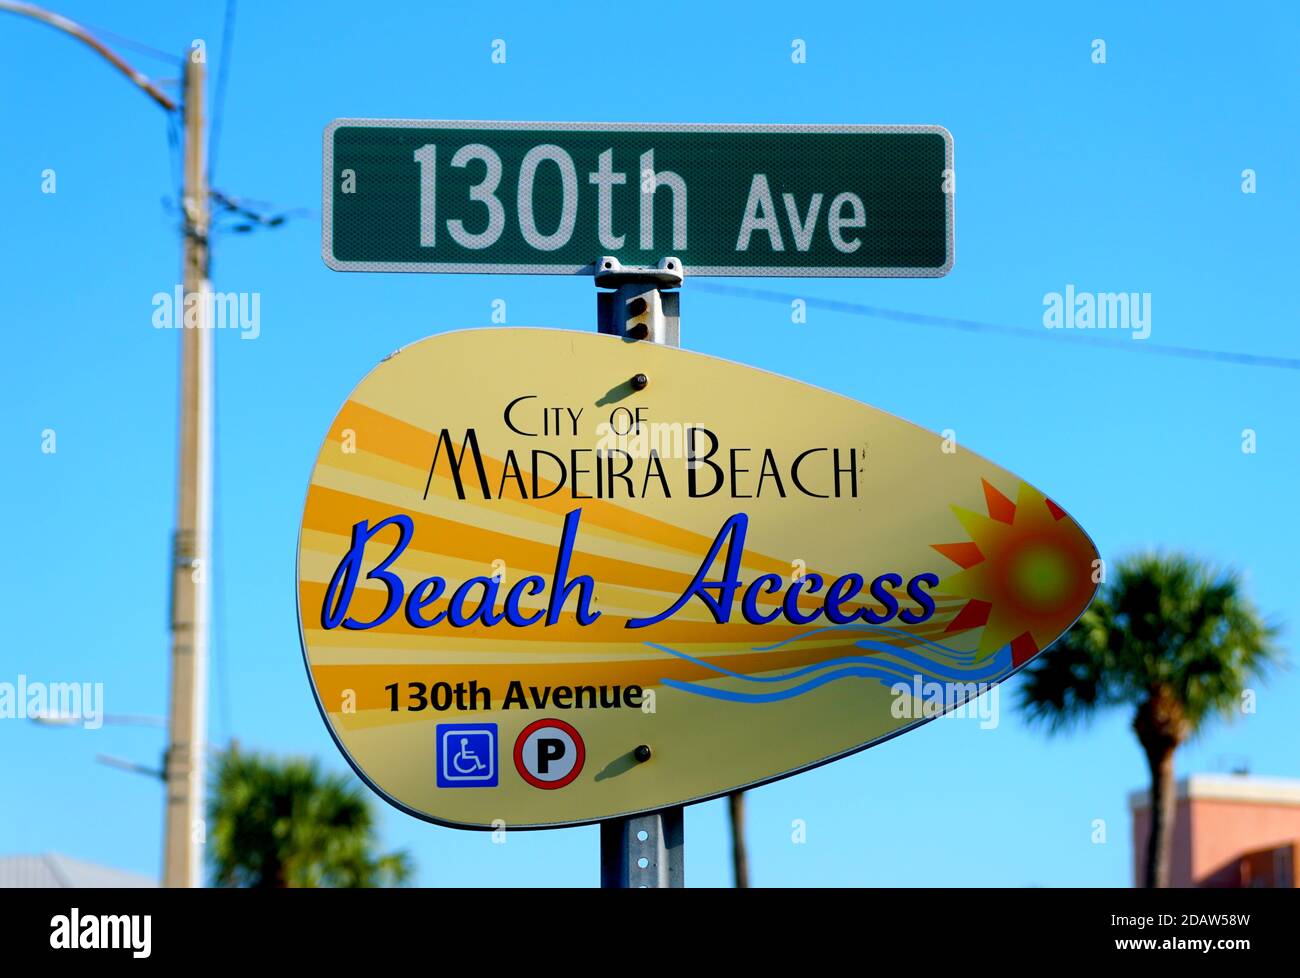 Madeira Beach, Florida, U.S.A - September 30, 2019 - The sign for beach access on 130th Avenue Stock Photo